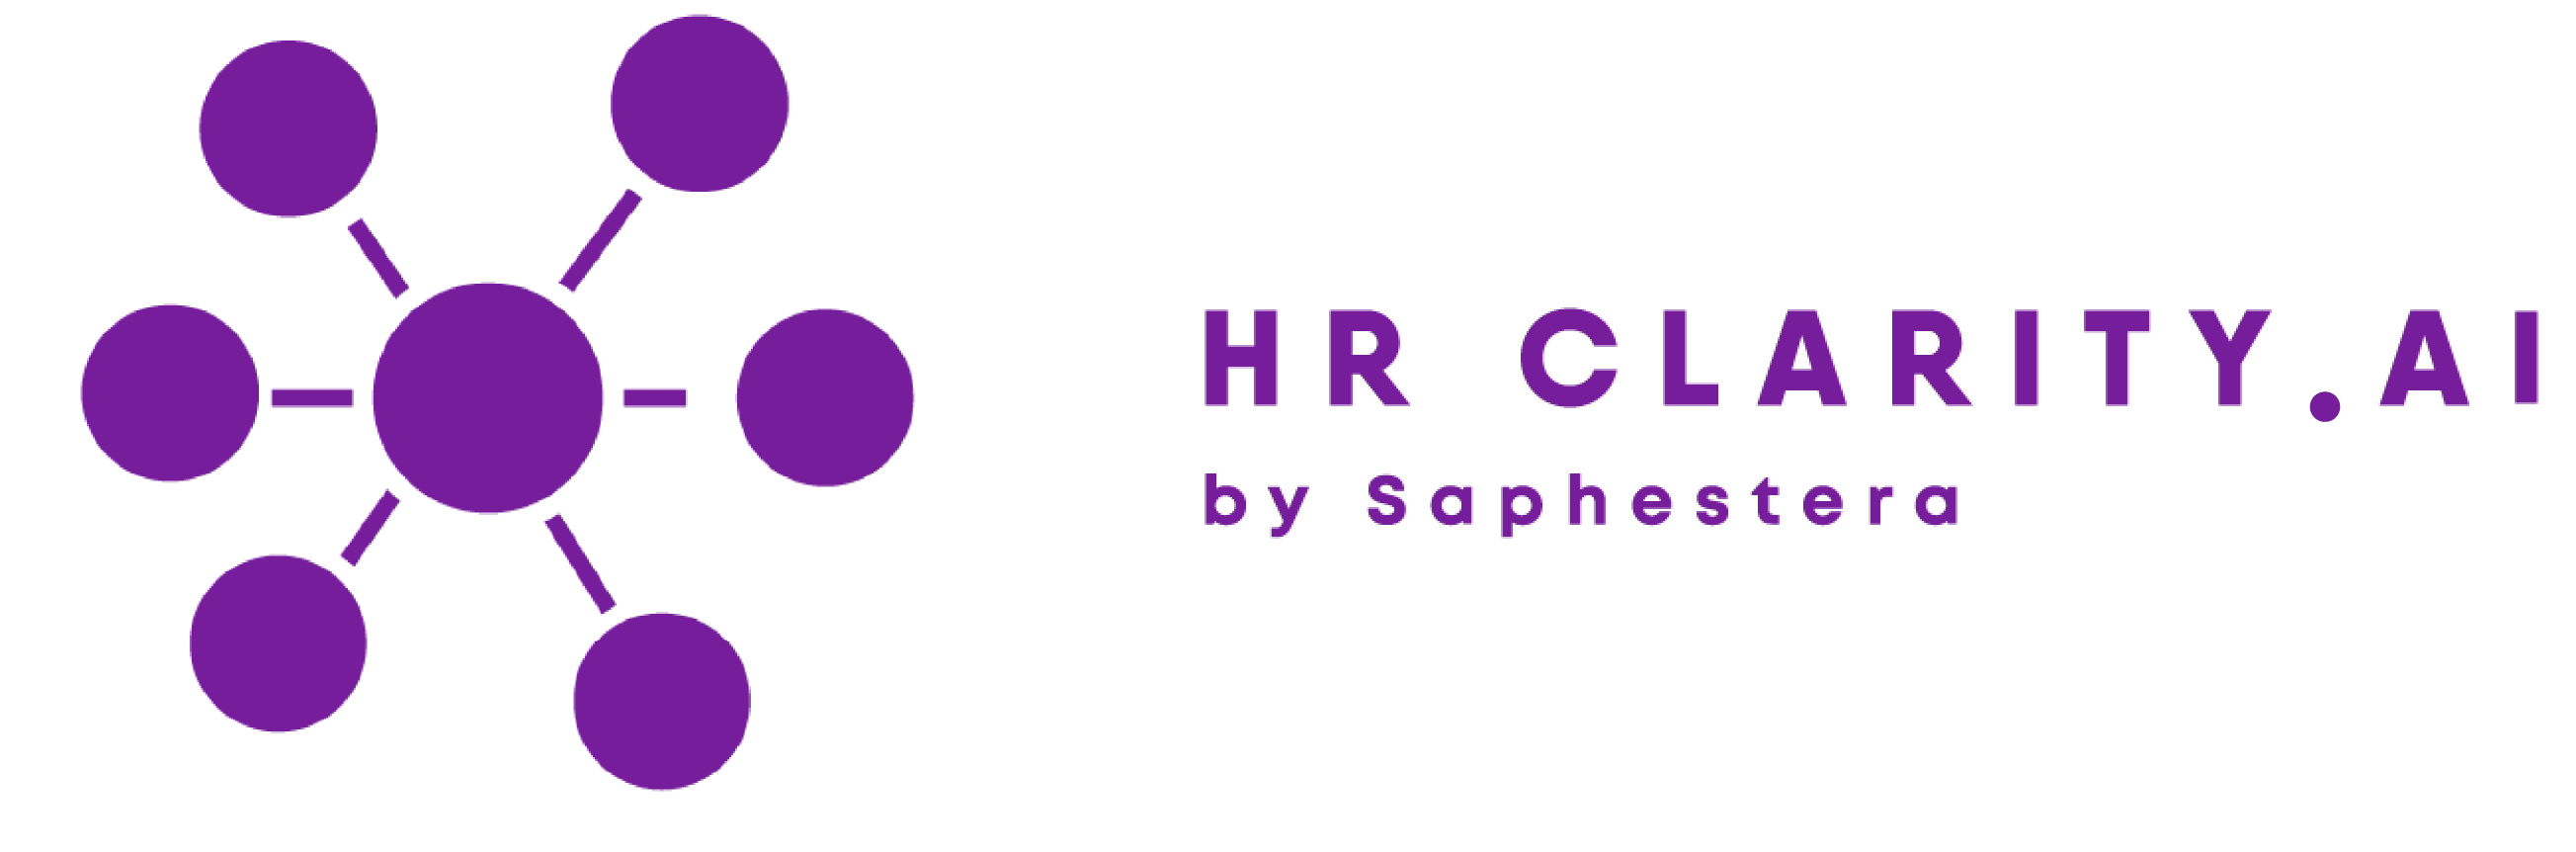 HR Clarity.AI by Saphestera